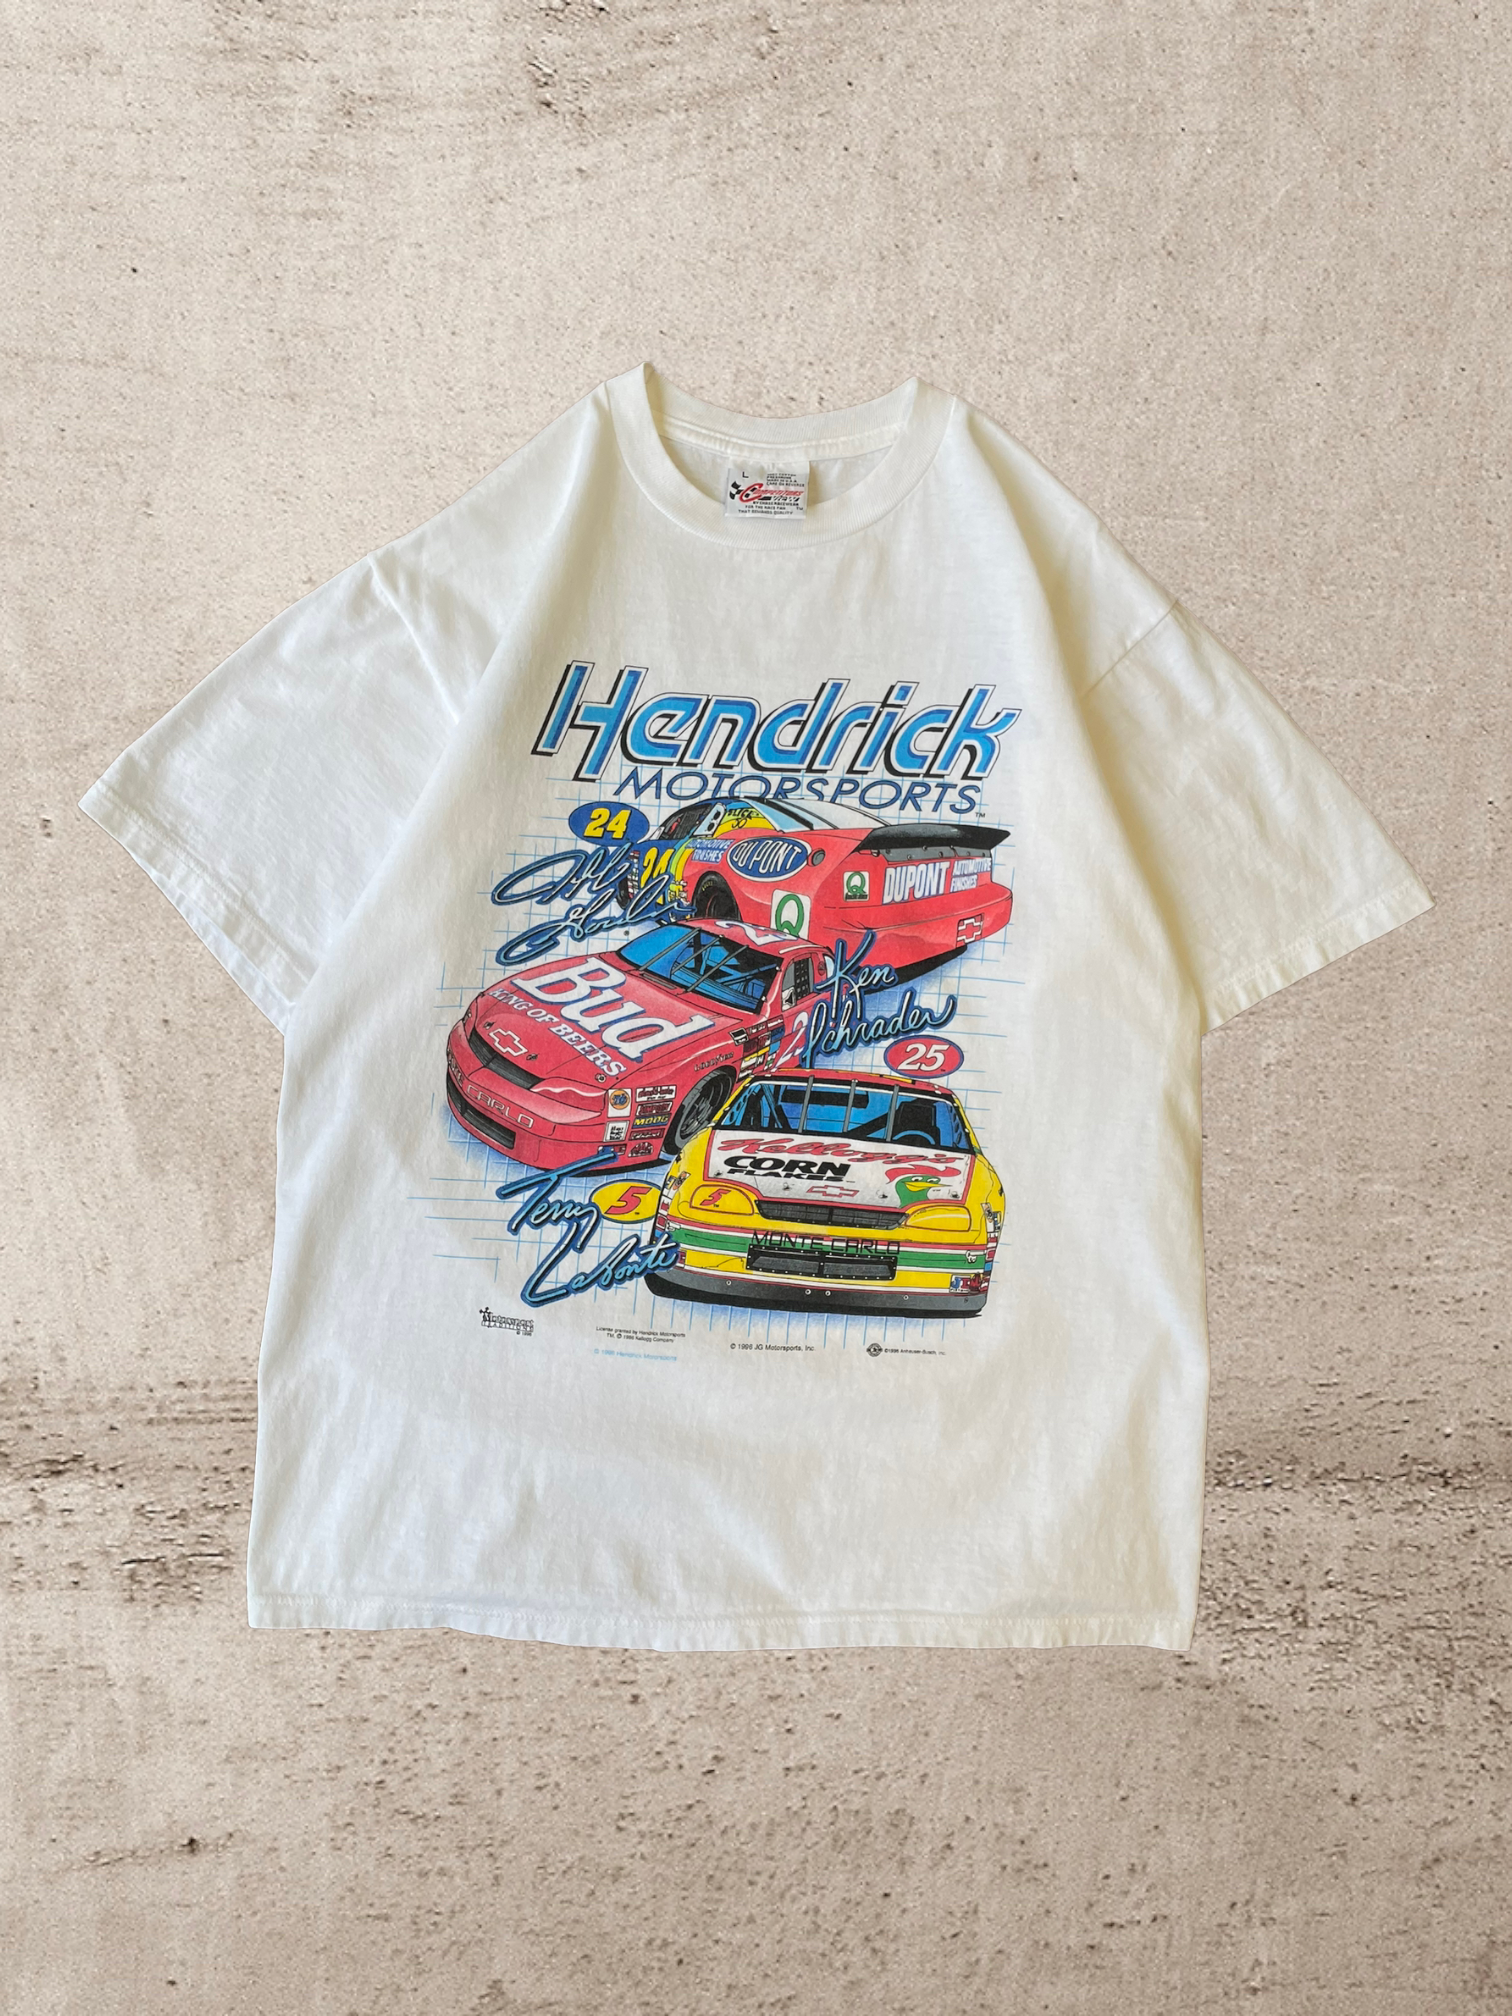 1996 Hendrick Motorsports Racing T-Shirt - Large